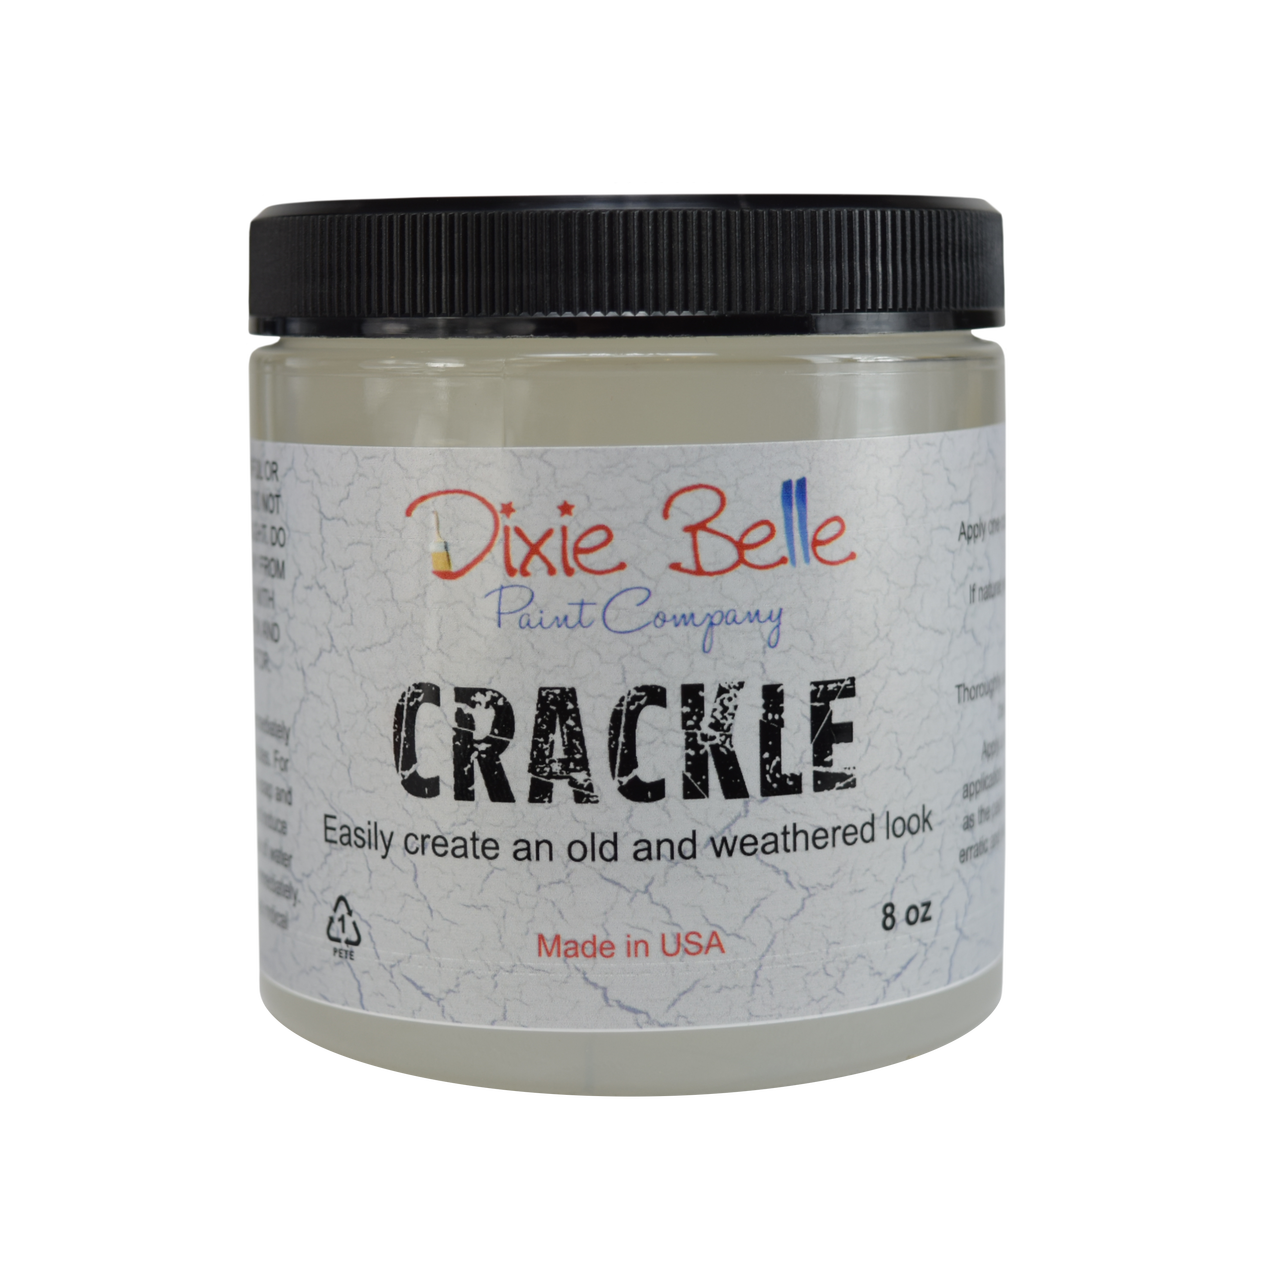 Dixie Belle Crackle Crackle medium